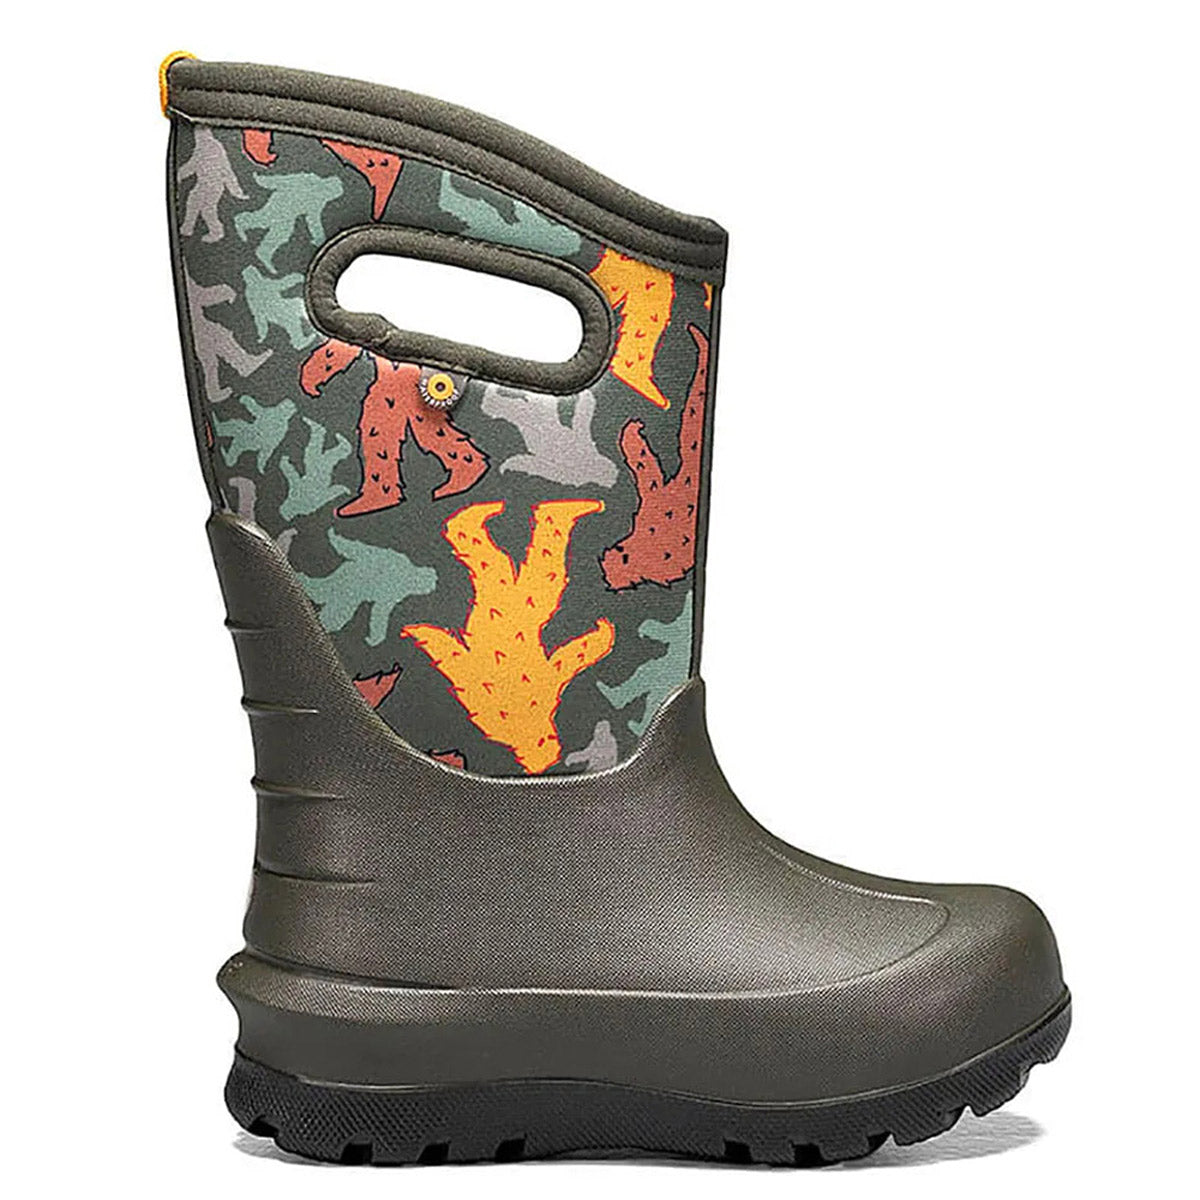 Children's BOGS NEO-CLASSIC BIGFOOT DARK GREEN MULTI rain boot with handle.